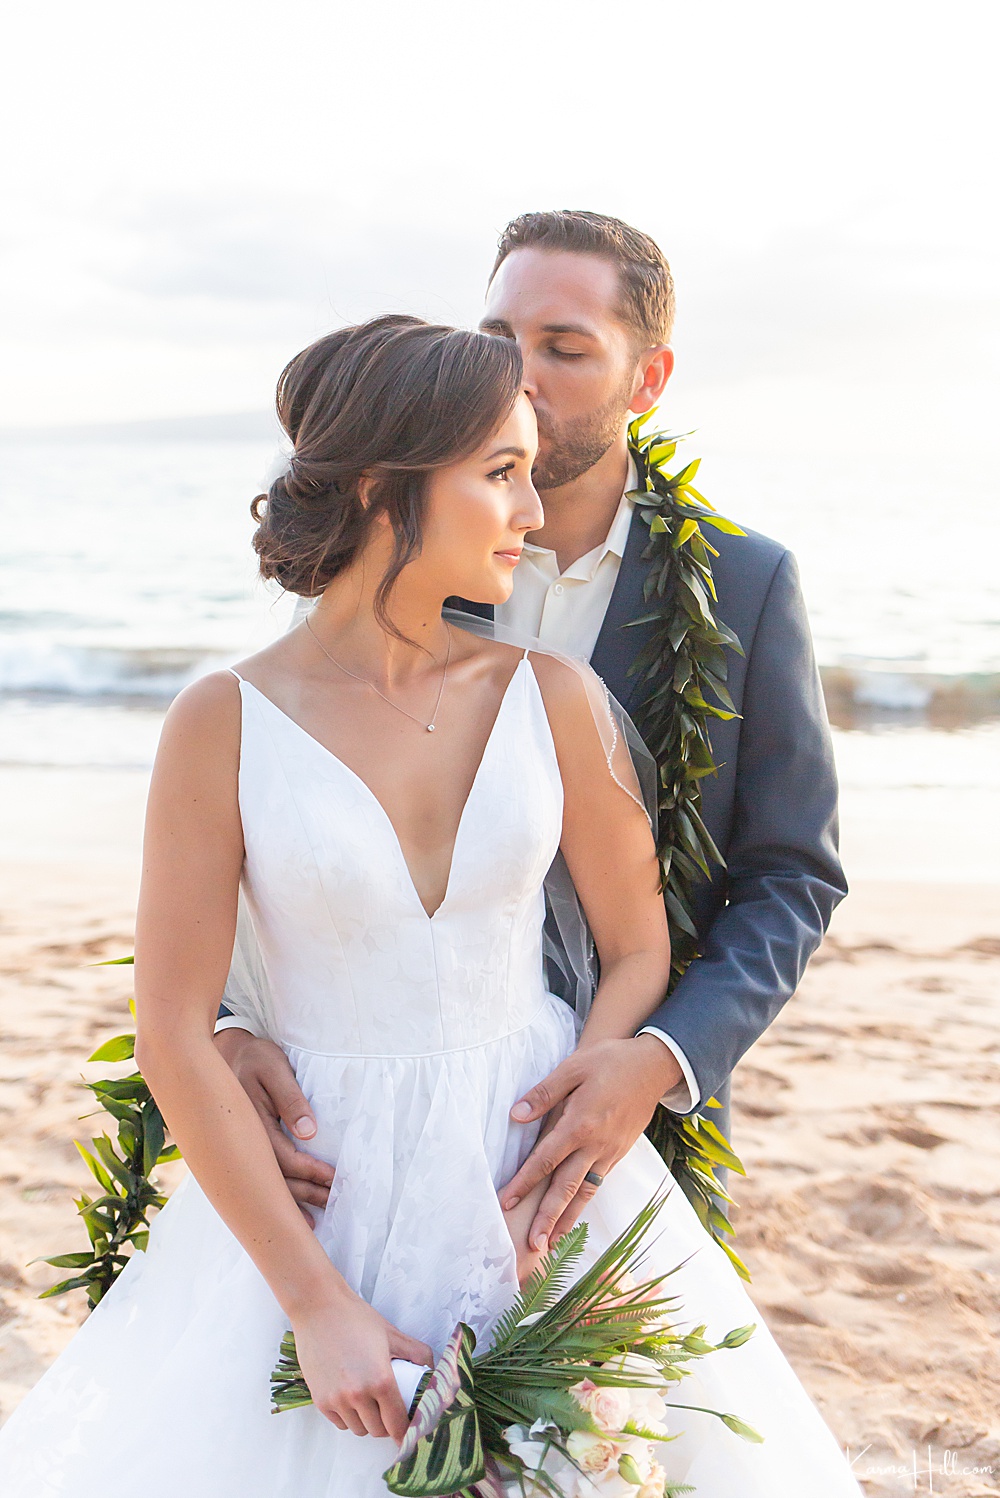 Simply Perfect - Kelsey & Wyatt's Maui Venue Wedding